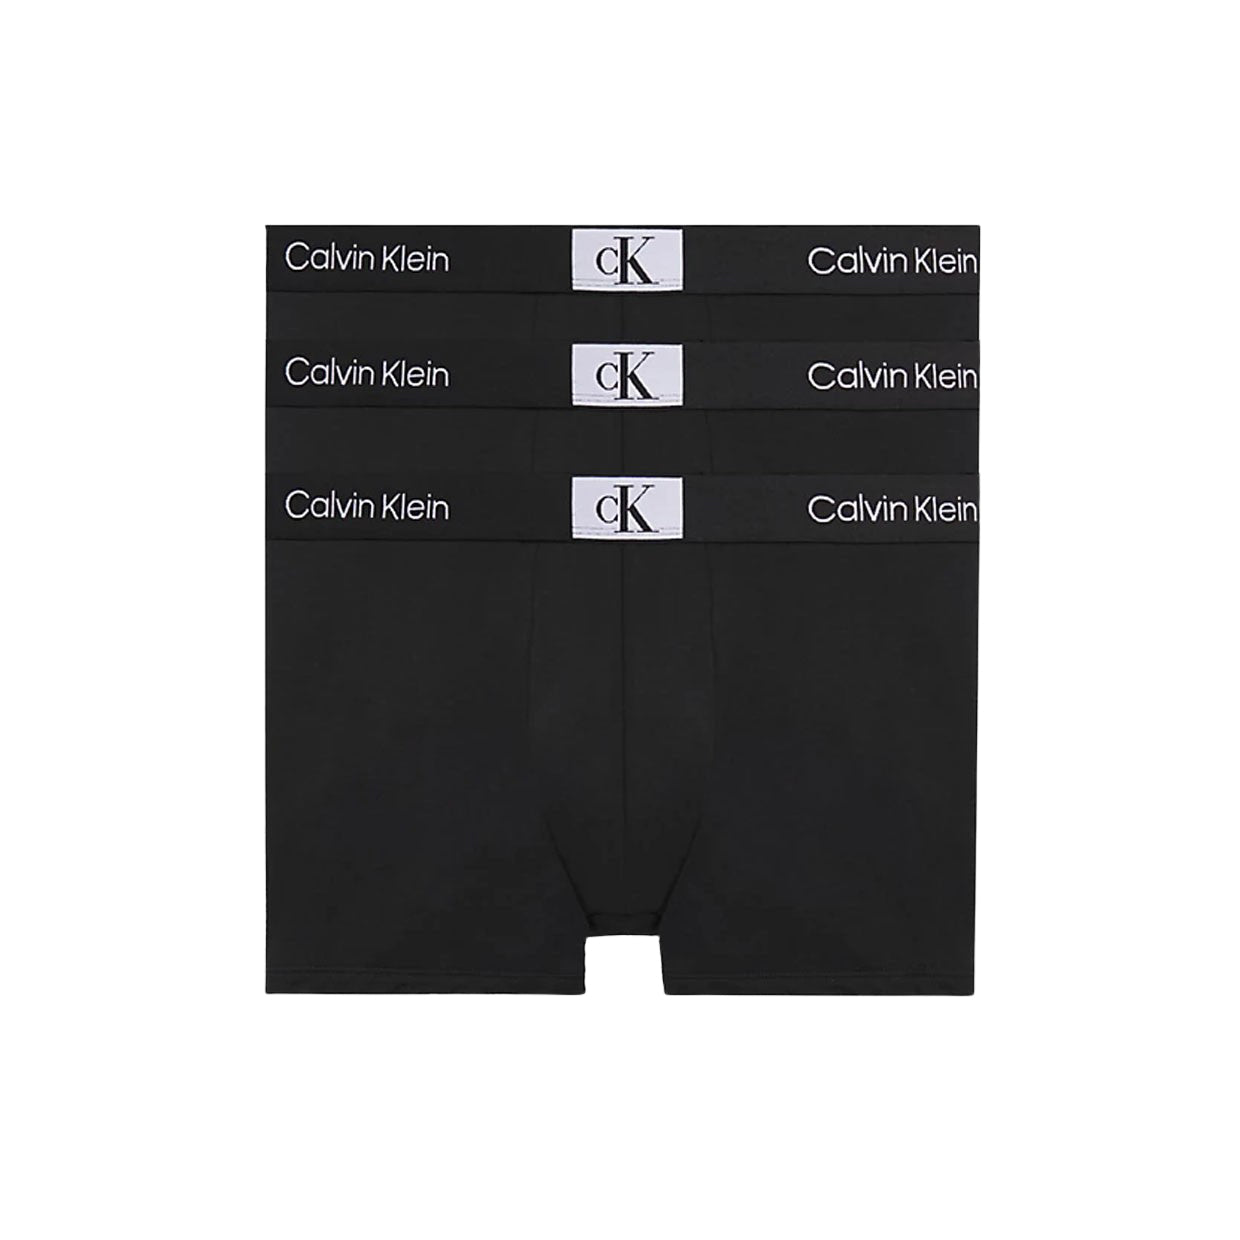 CALVIN KLEIN - Men's 3-pack briefs with logo - Black - 000NB2379A001